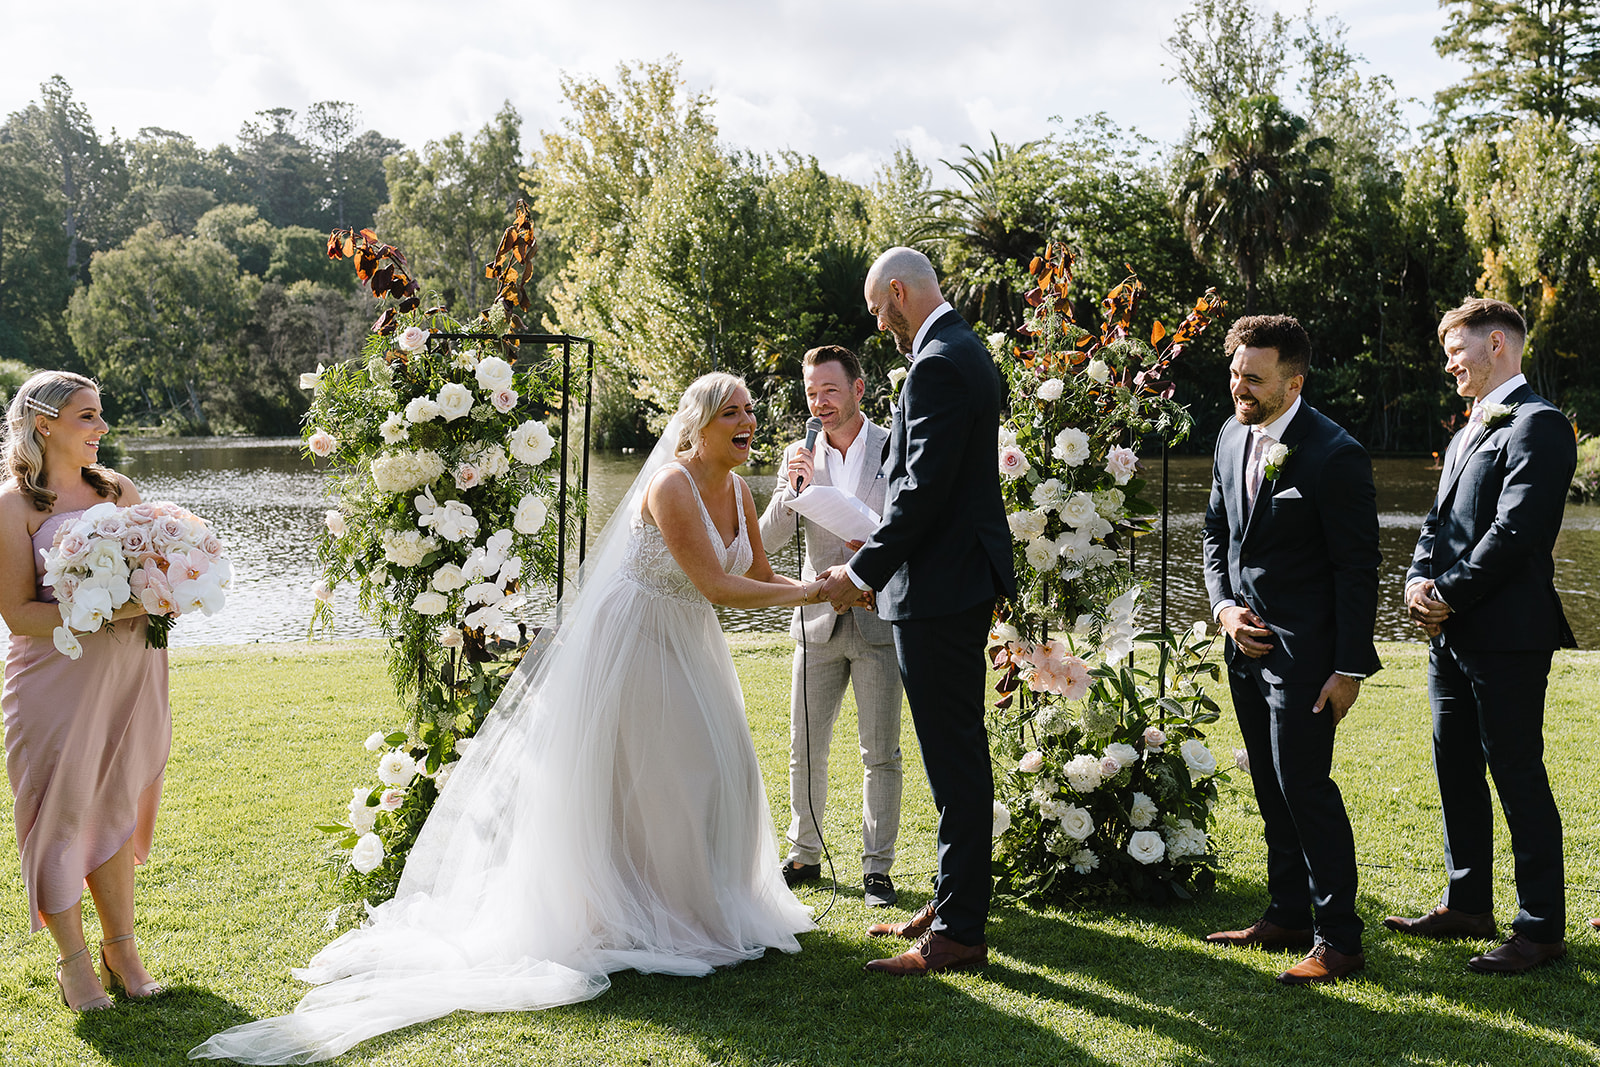 Fun wedding ceremony at The Terrace Royal Botantic Gardens Melbourne wedding